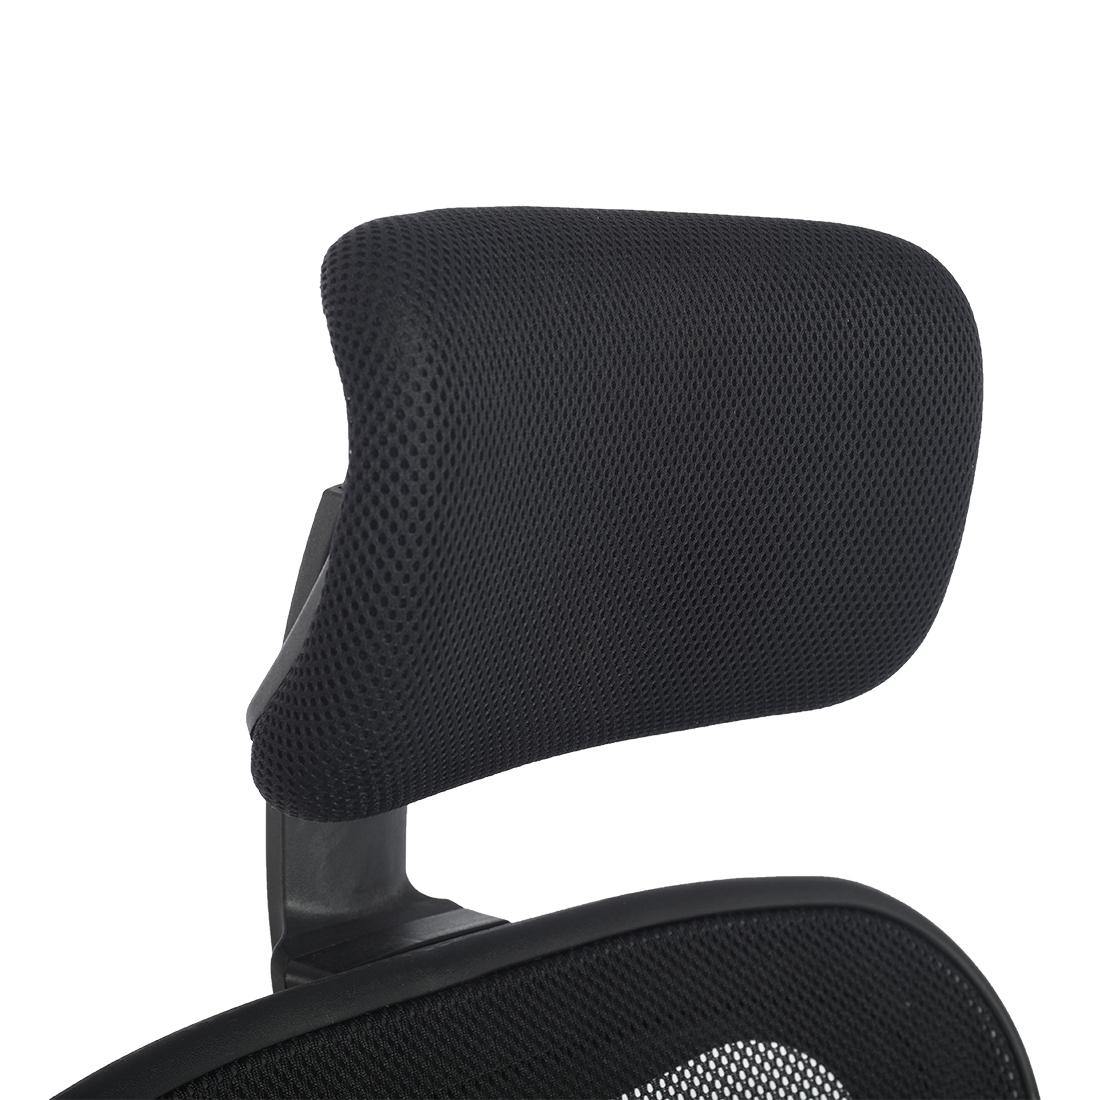 Buy Jordan Standard Mesh High Back Chairs Online At Durian